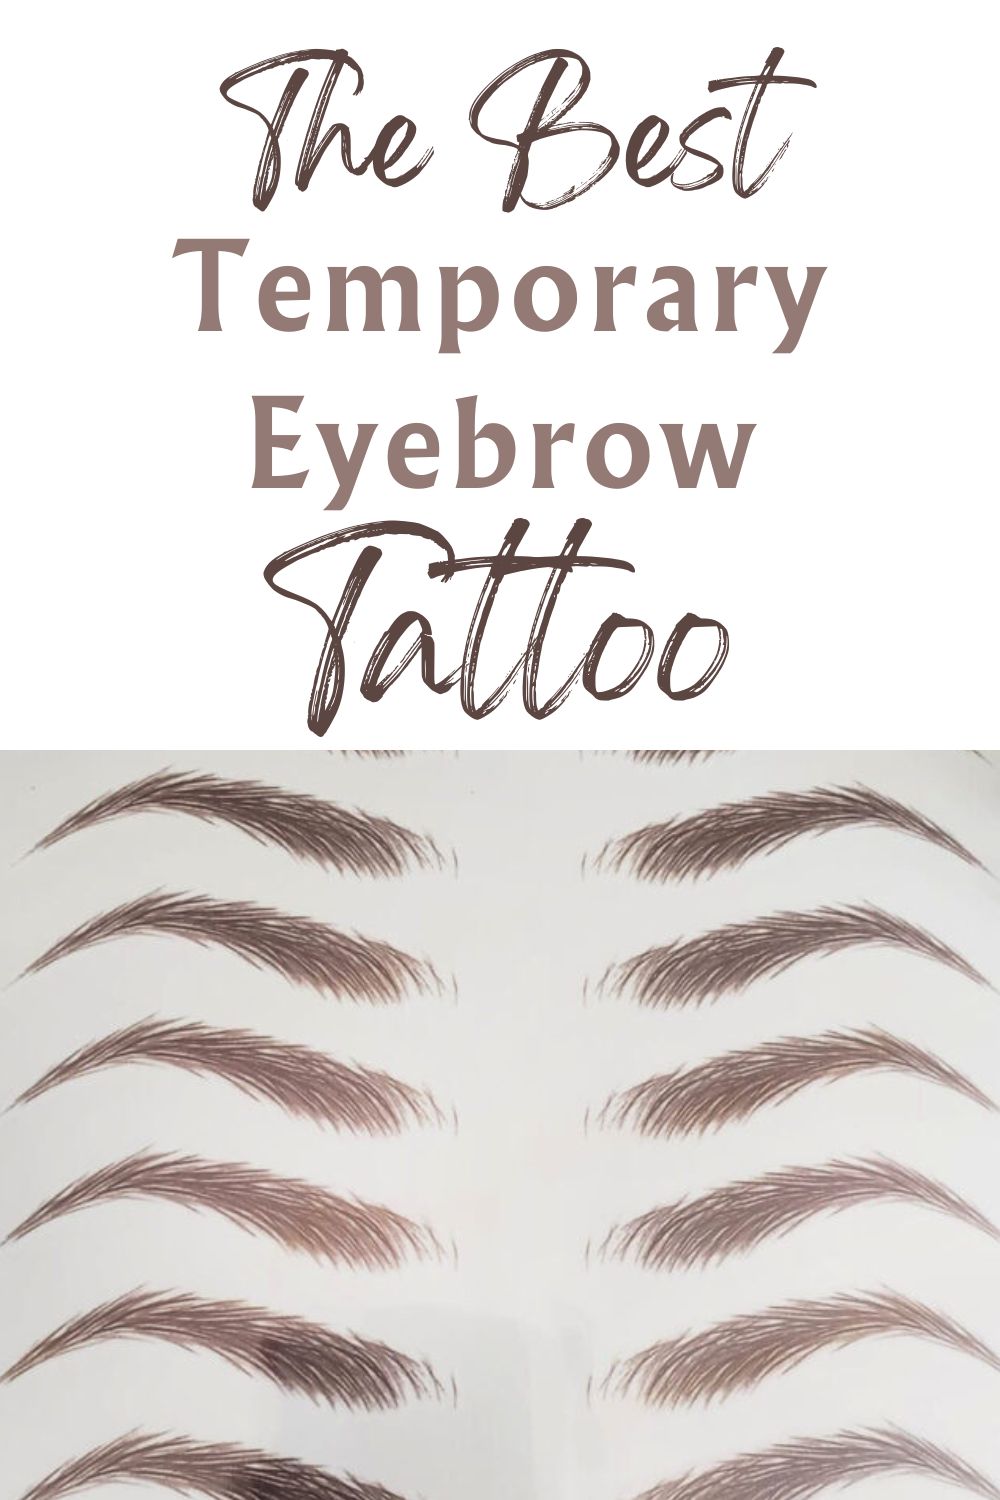 Temporary Eyebrow Tattoos